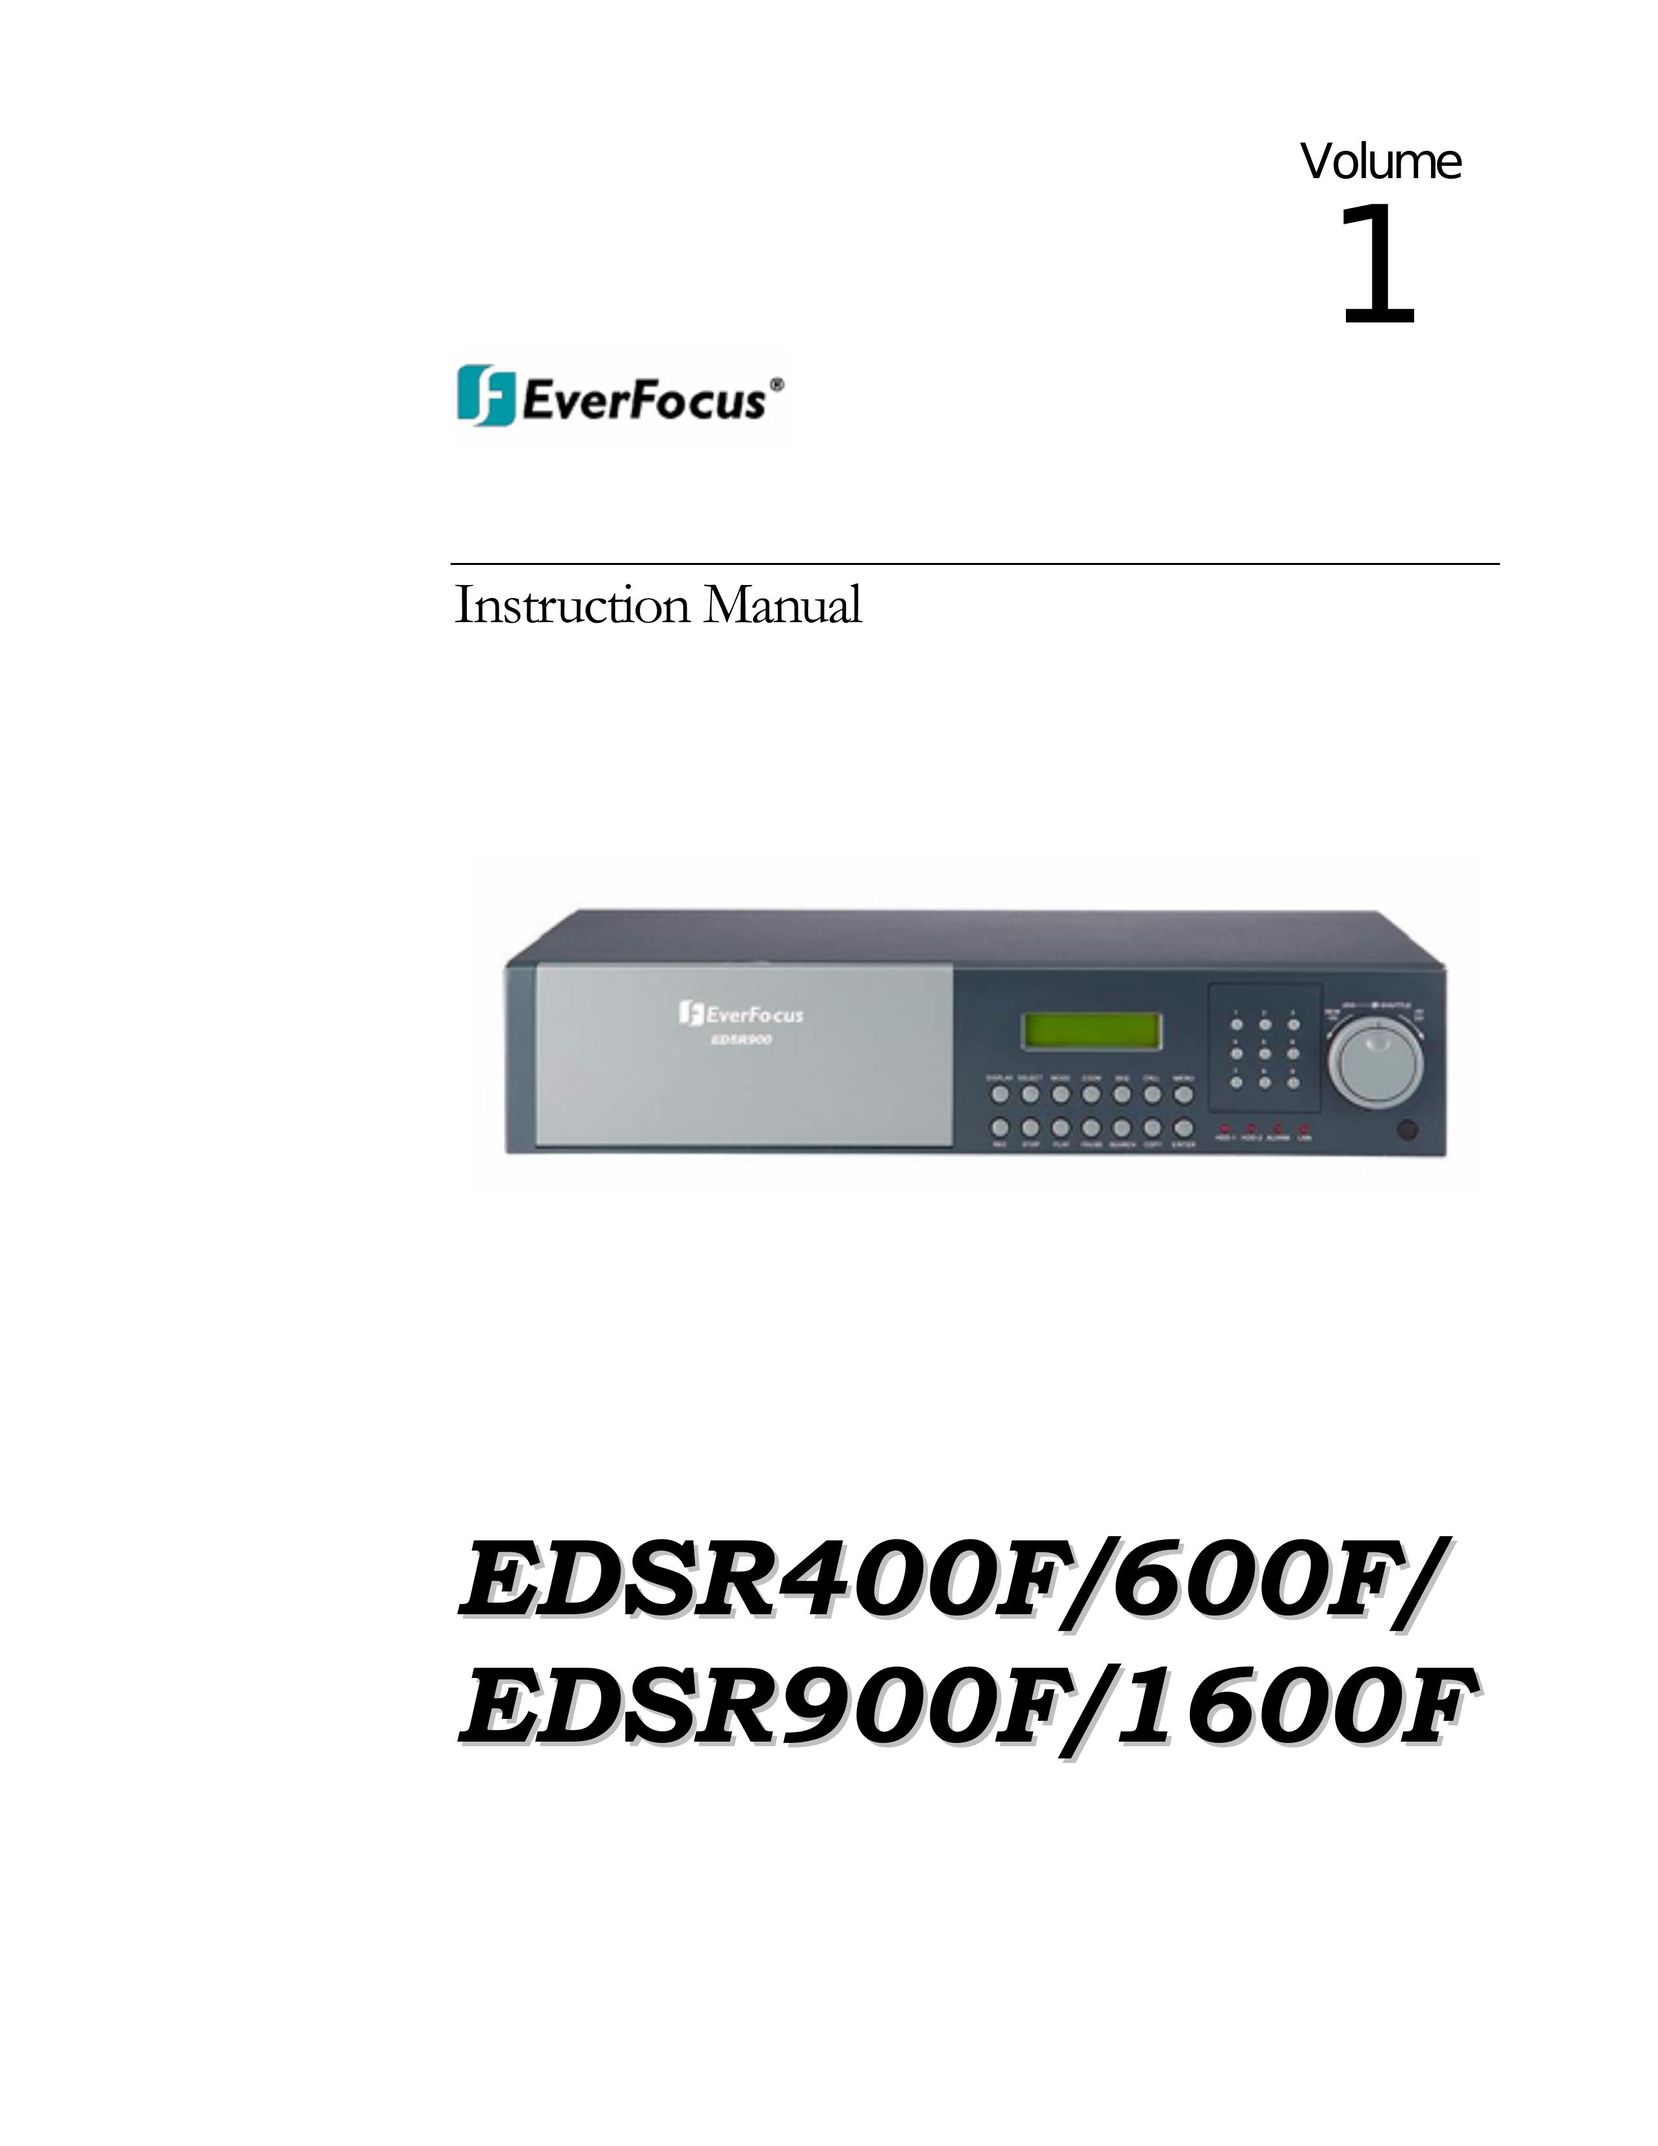 EverFocus EDSR 400F Boiler User Manual